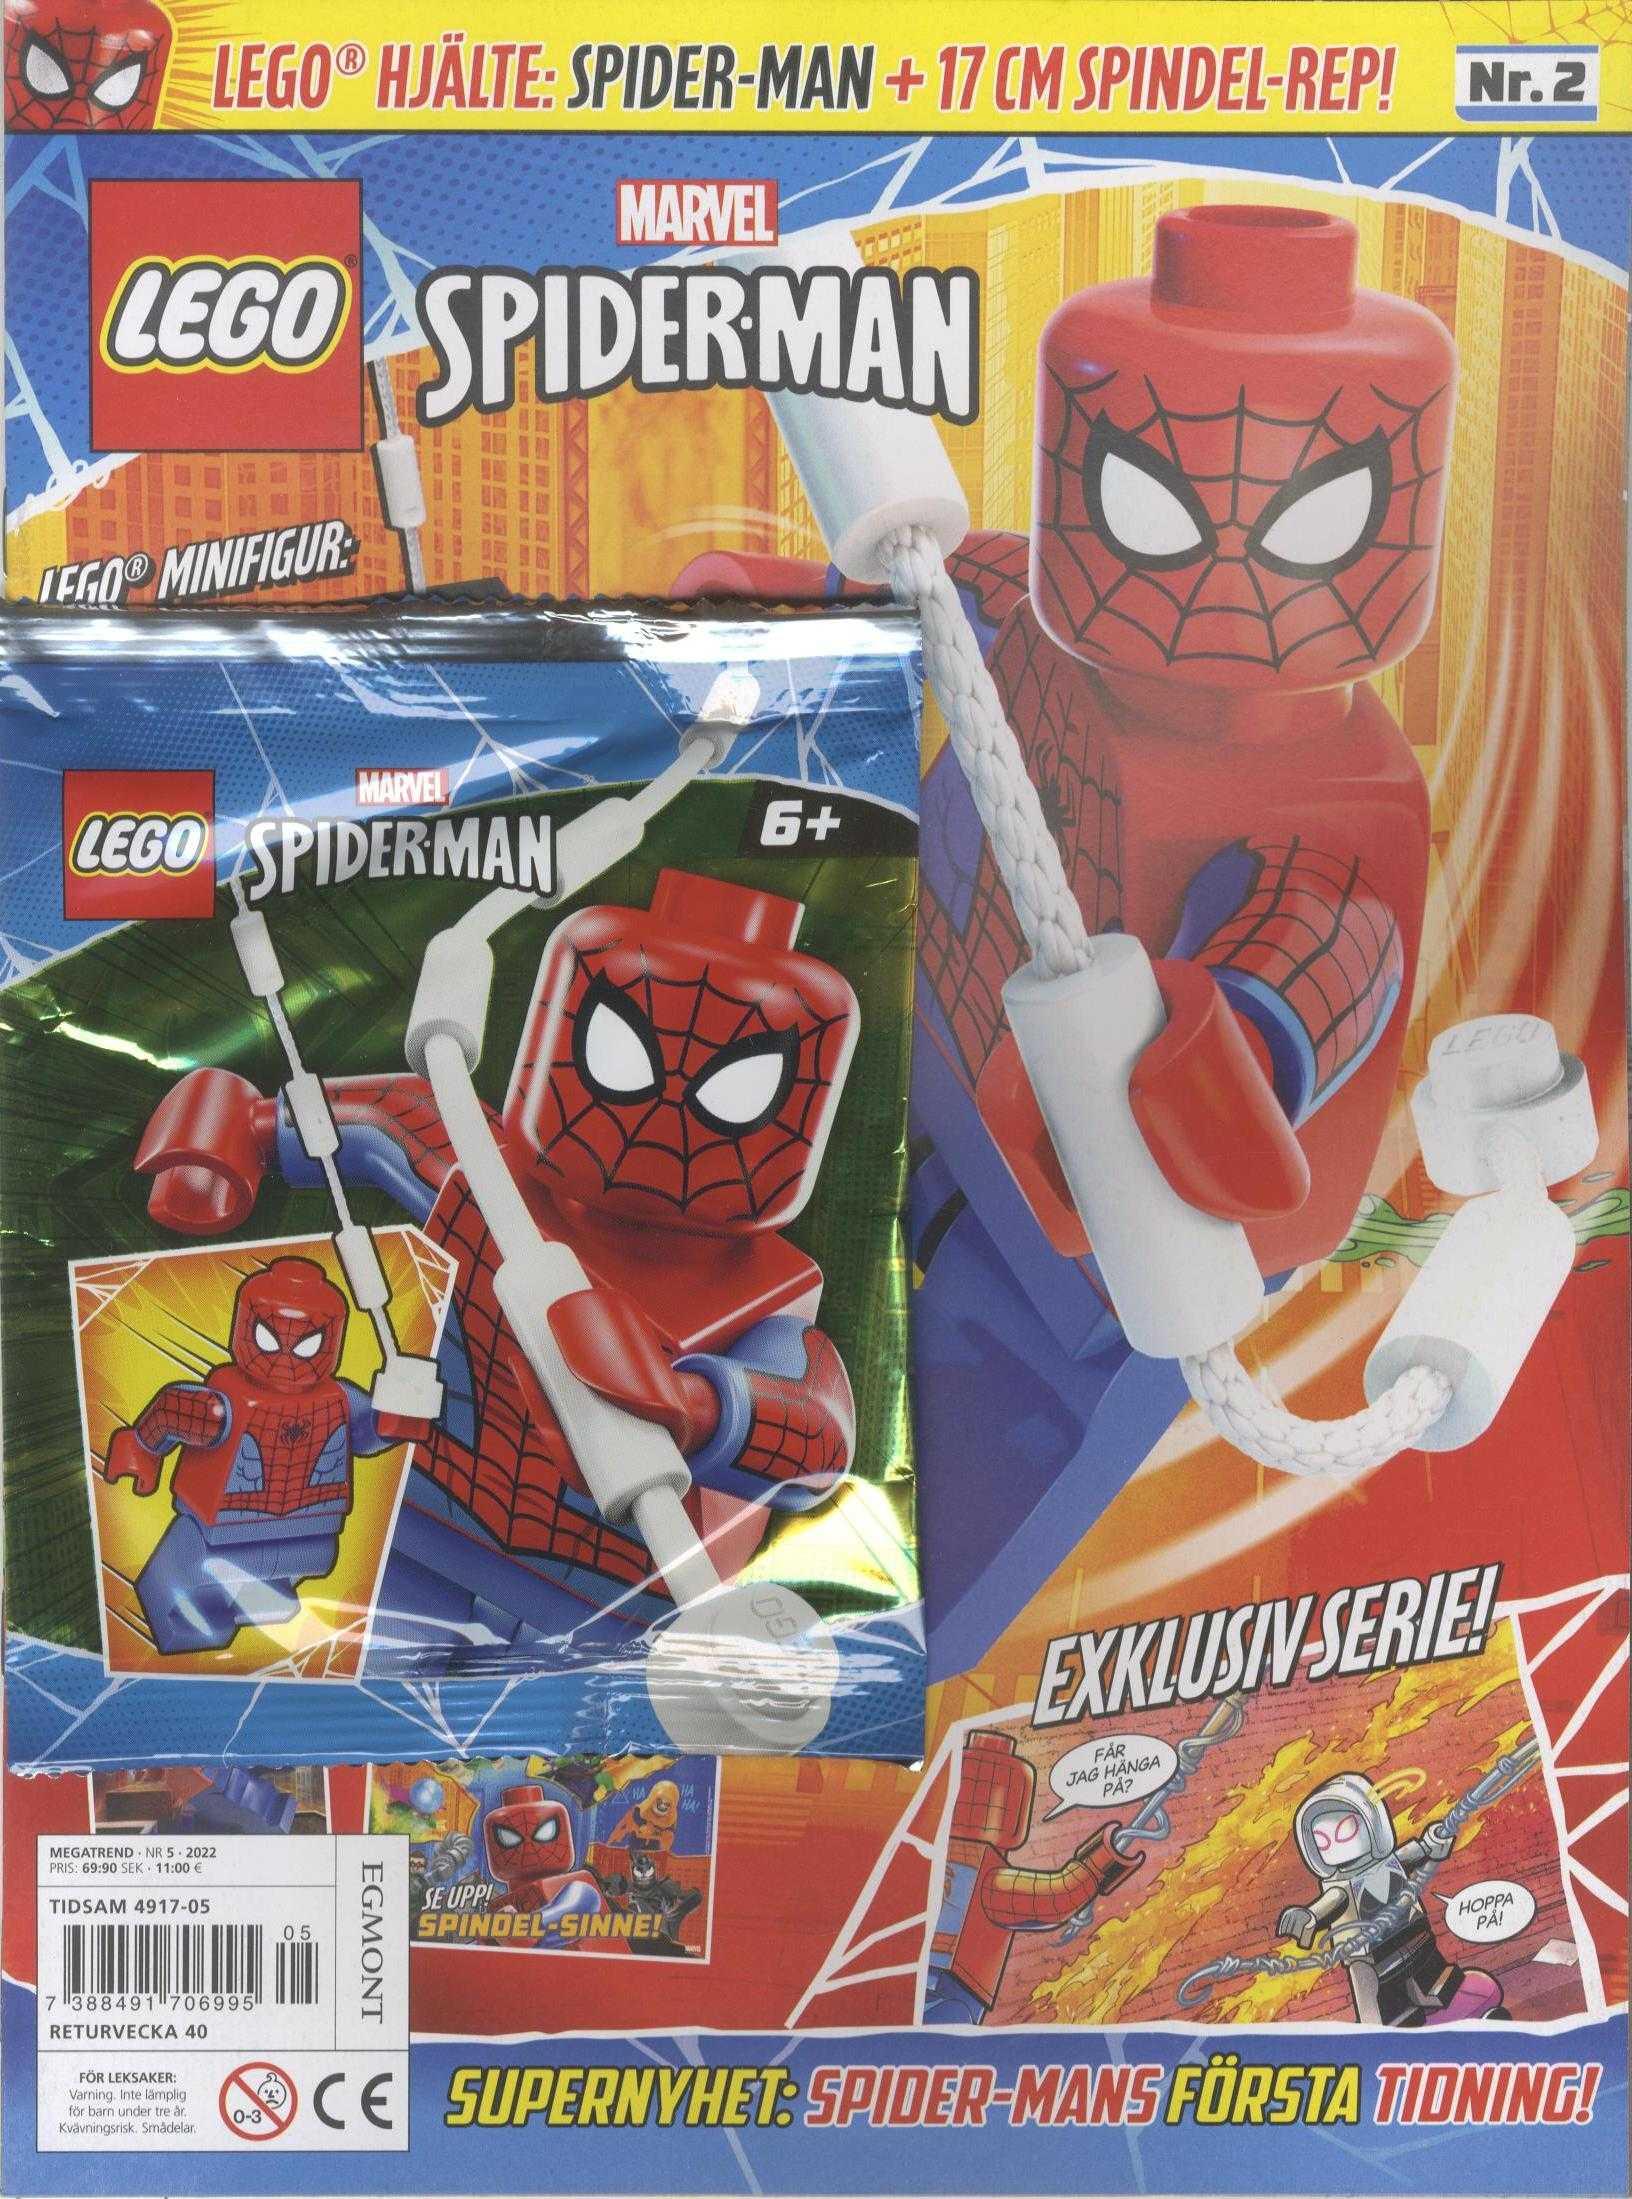 Megatrend LEGO Spiderman